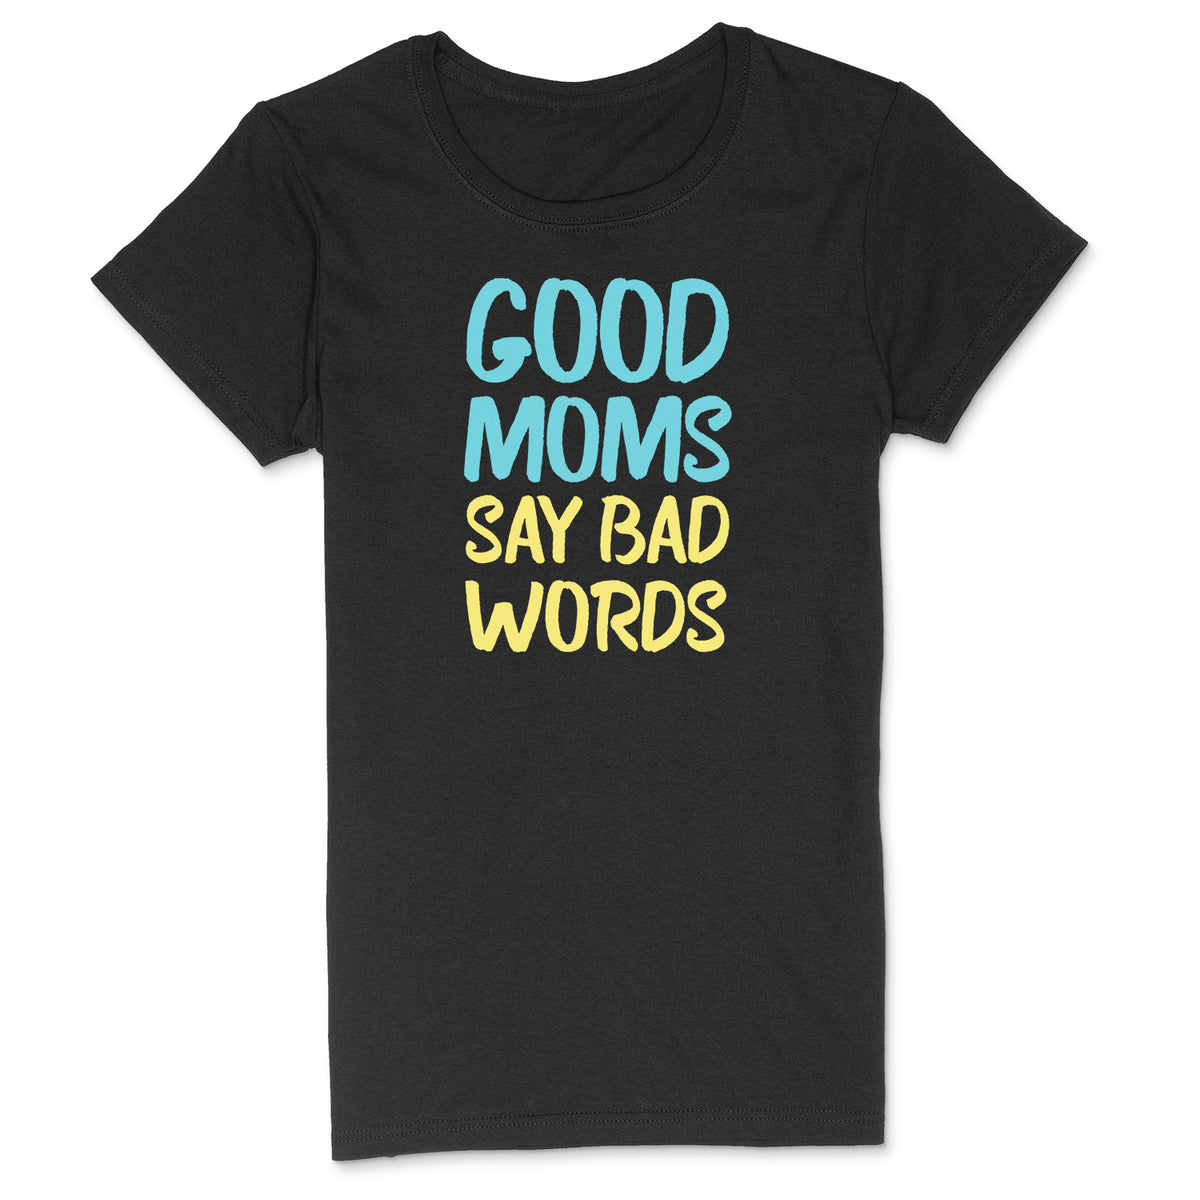 "Good Moms" Premium Midweight Ringspun Cotton T-Shirt - Mens/Womens Fits